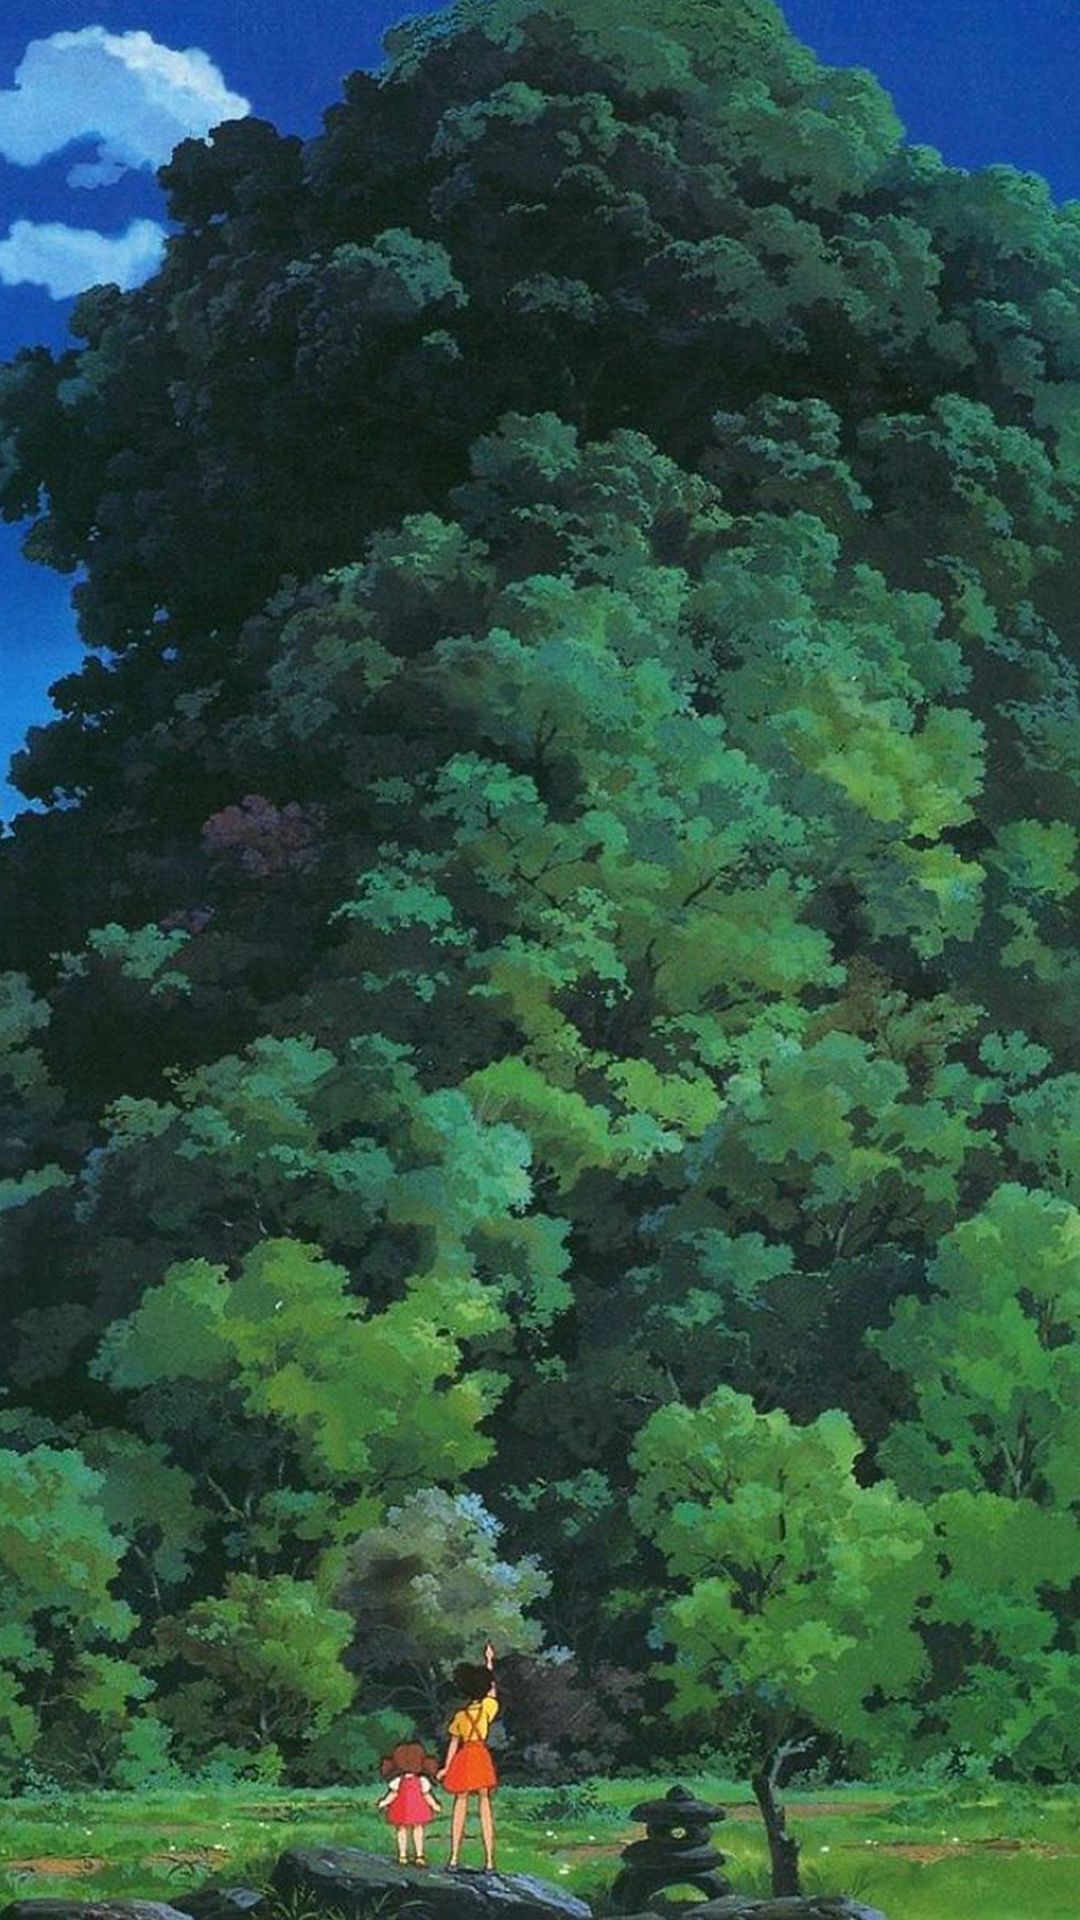 Studio Ghibli Tree Green Art Illustration Love Anime iPhone 6 Wallpaper Download. iPhone Wallpaper, iPad wallp. Ghibli artwork, Studio ghibli art, Studio ghibli